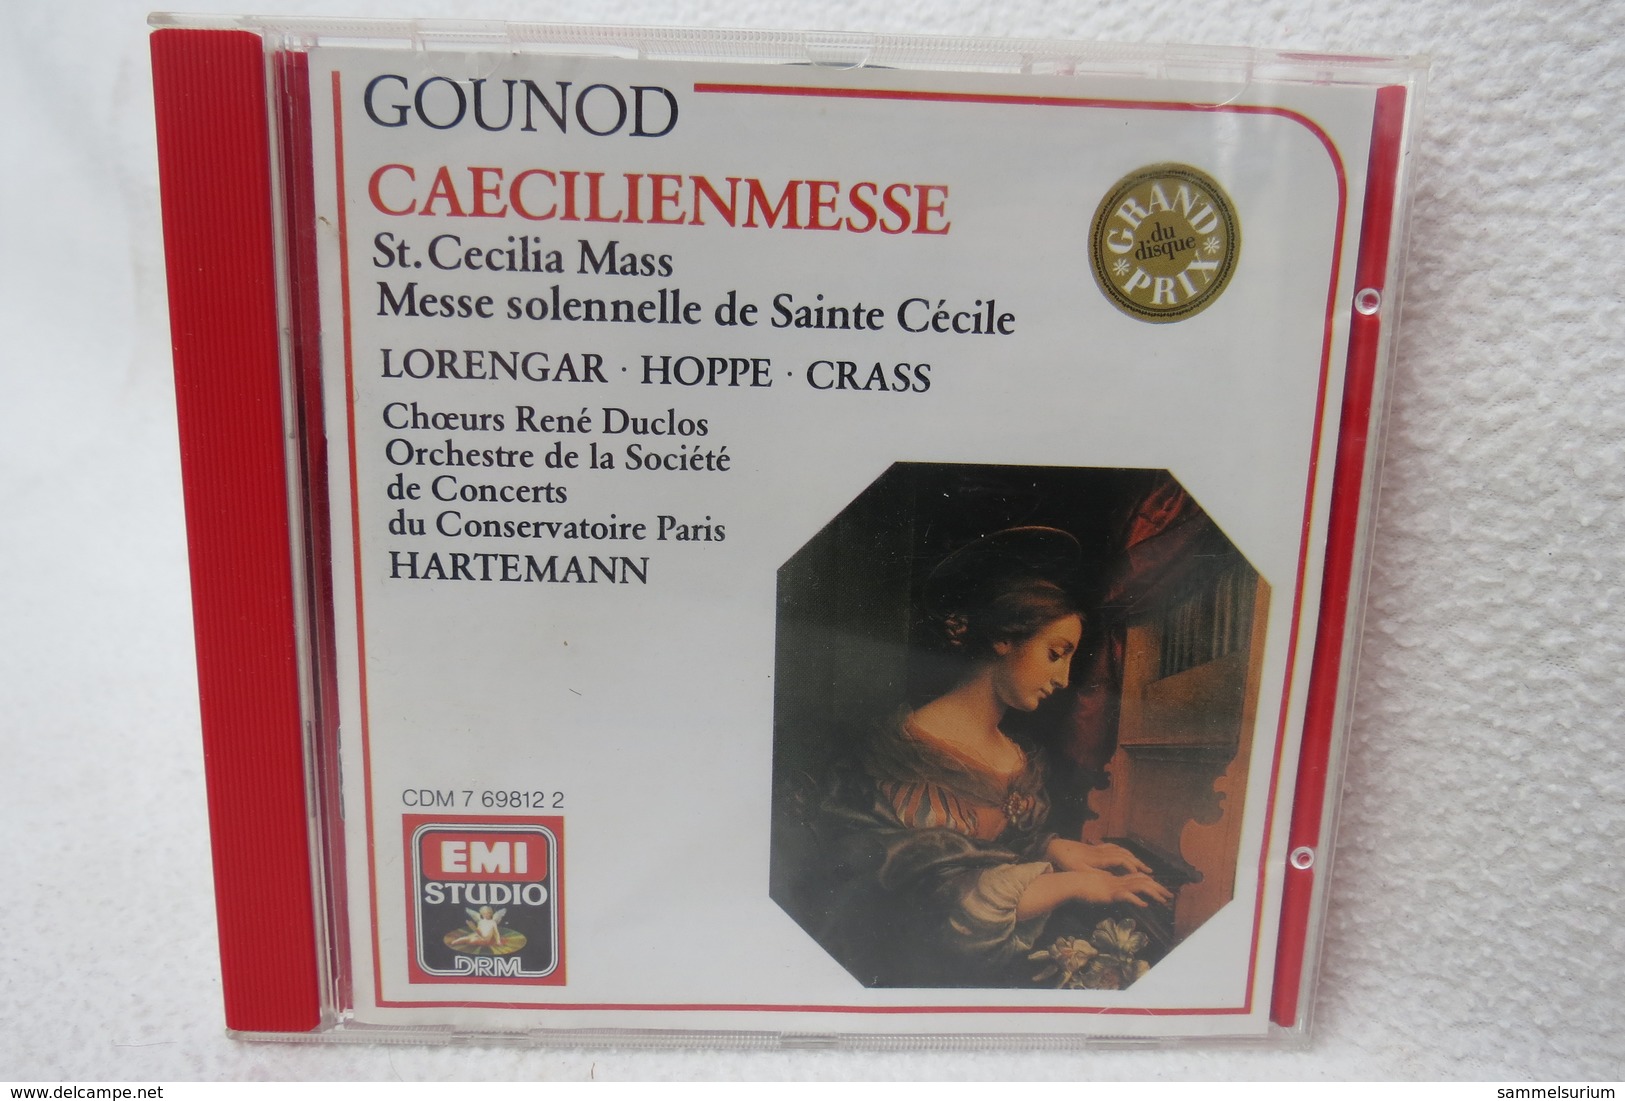 CD "Charles Gounod" Caecilienmesse - Klassik